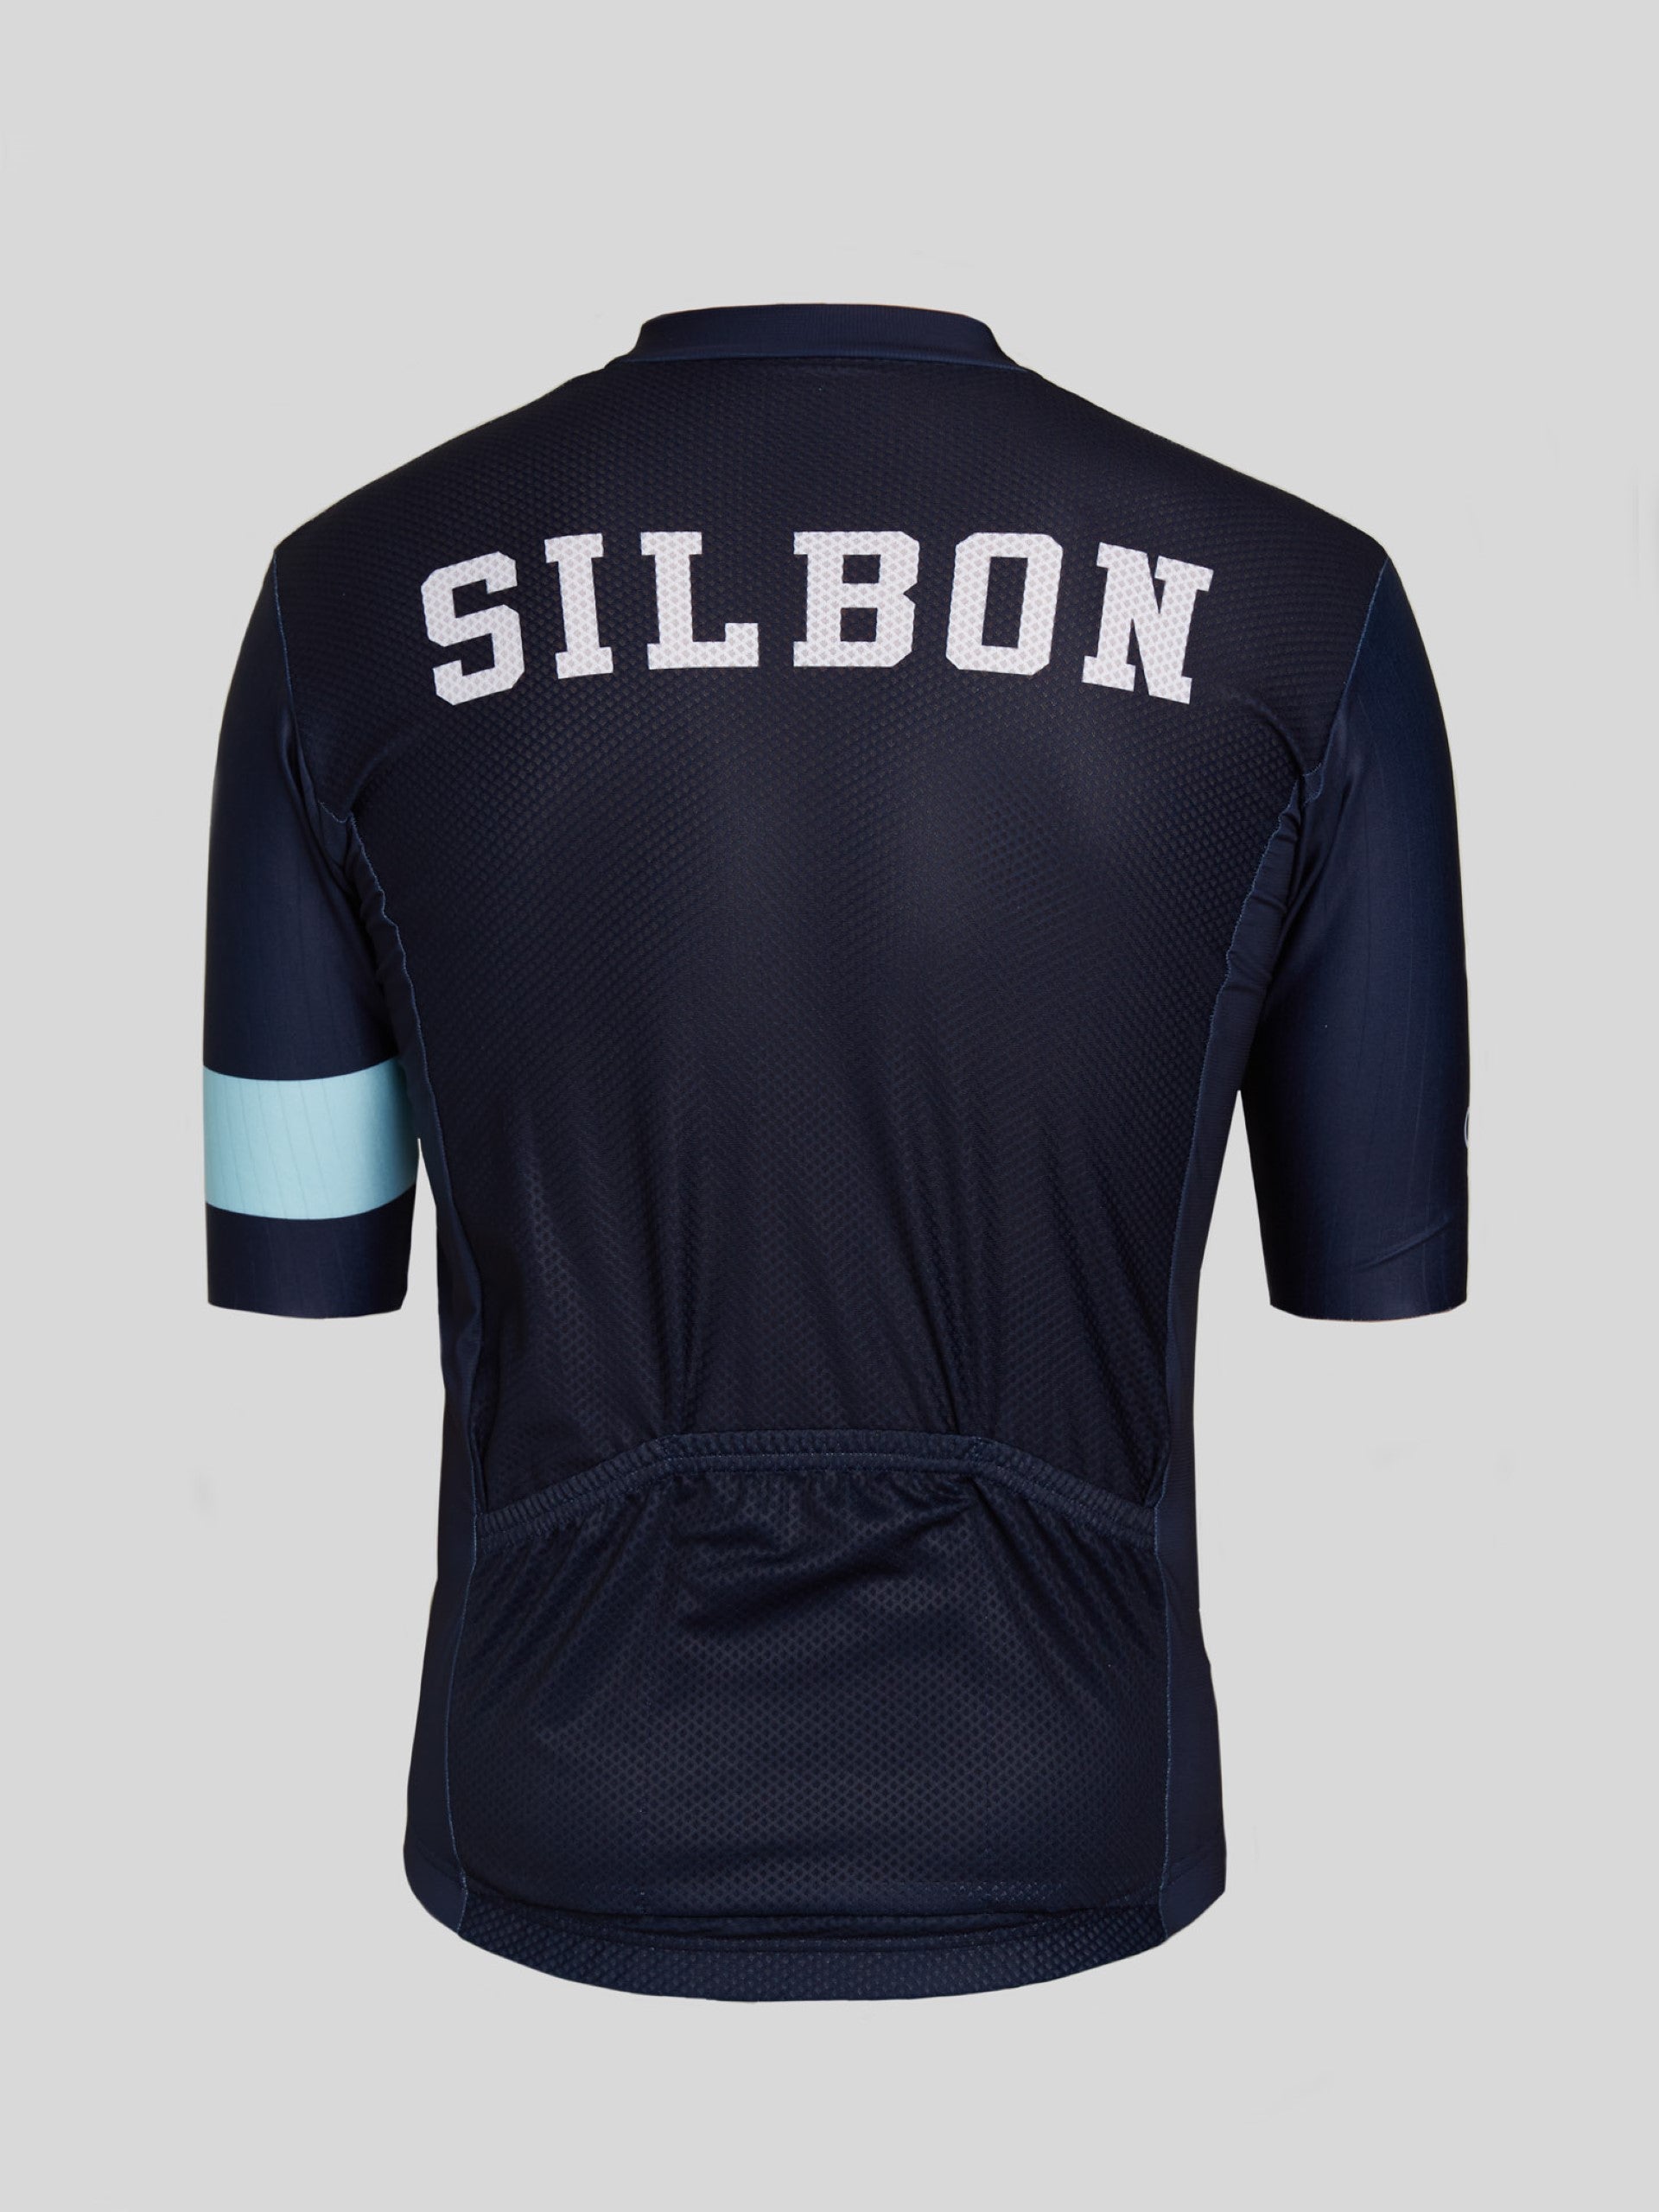 Maillot Silbon bleu aigue-marine